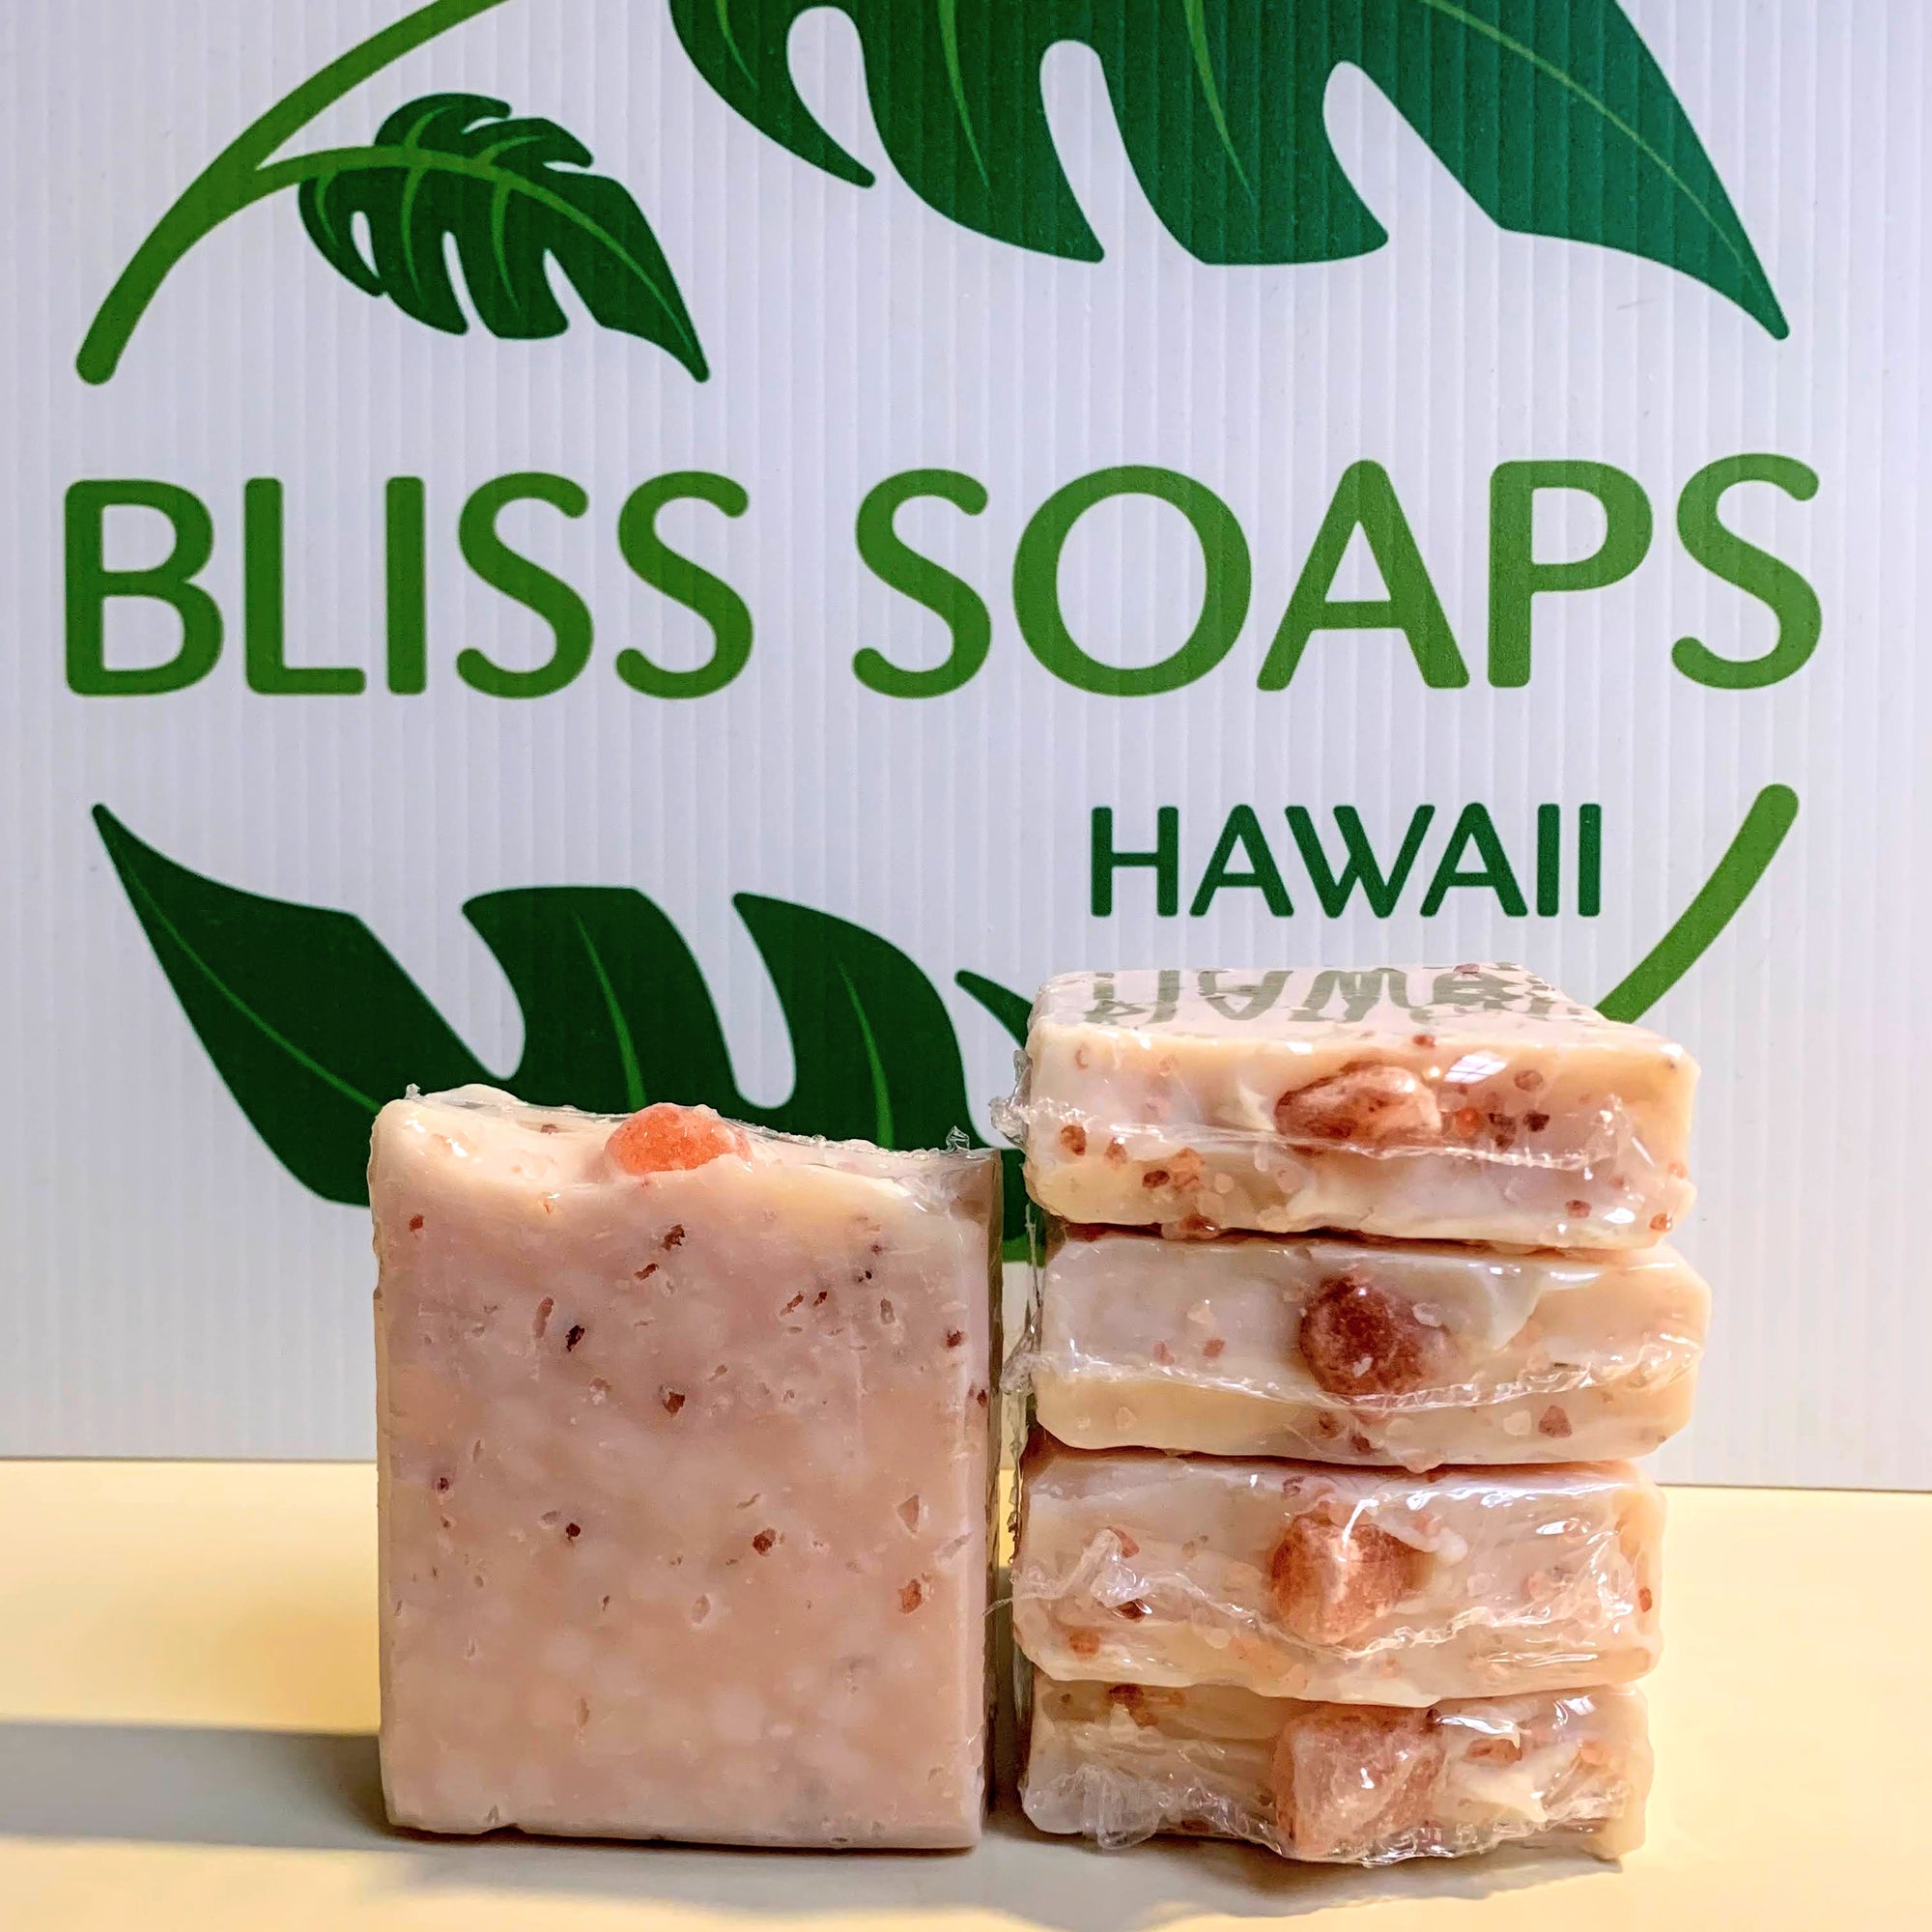 Pop-Up Mākeke - Bliss Soaps Hawaii - Pink Himalayan Salt and Lily Bath & Body Bar Soap